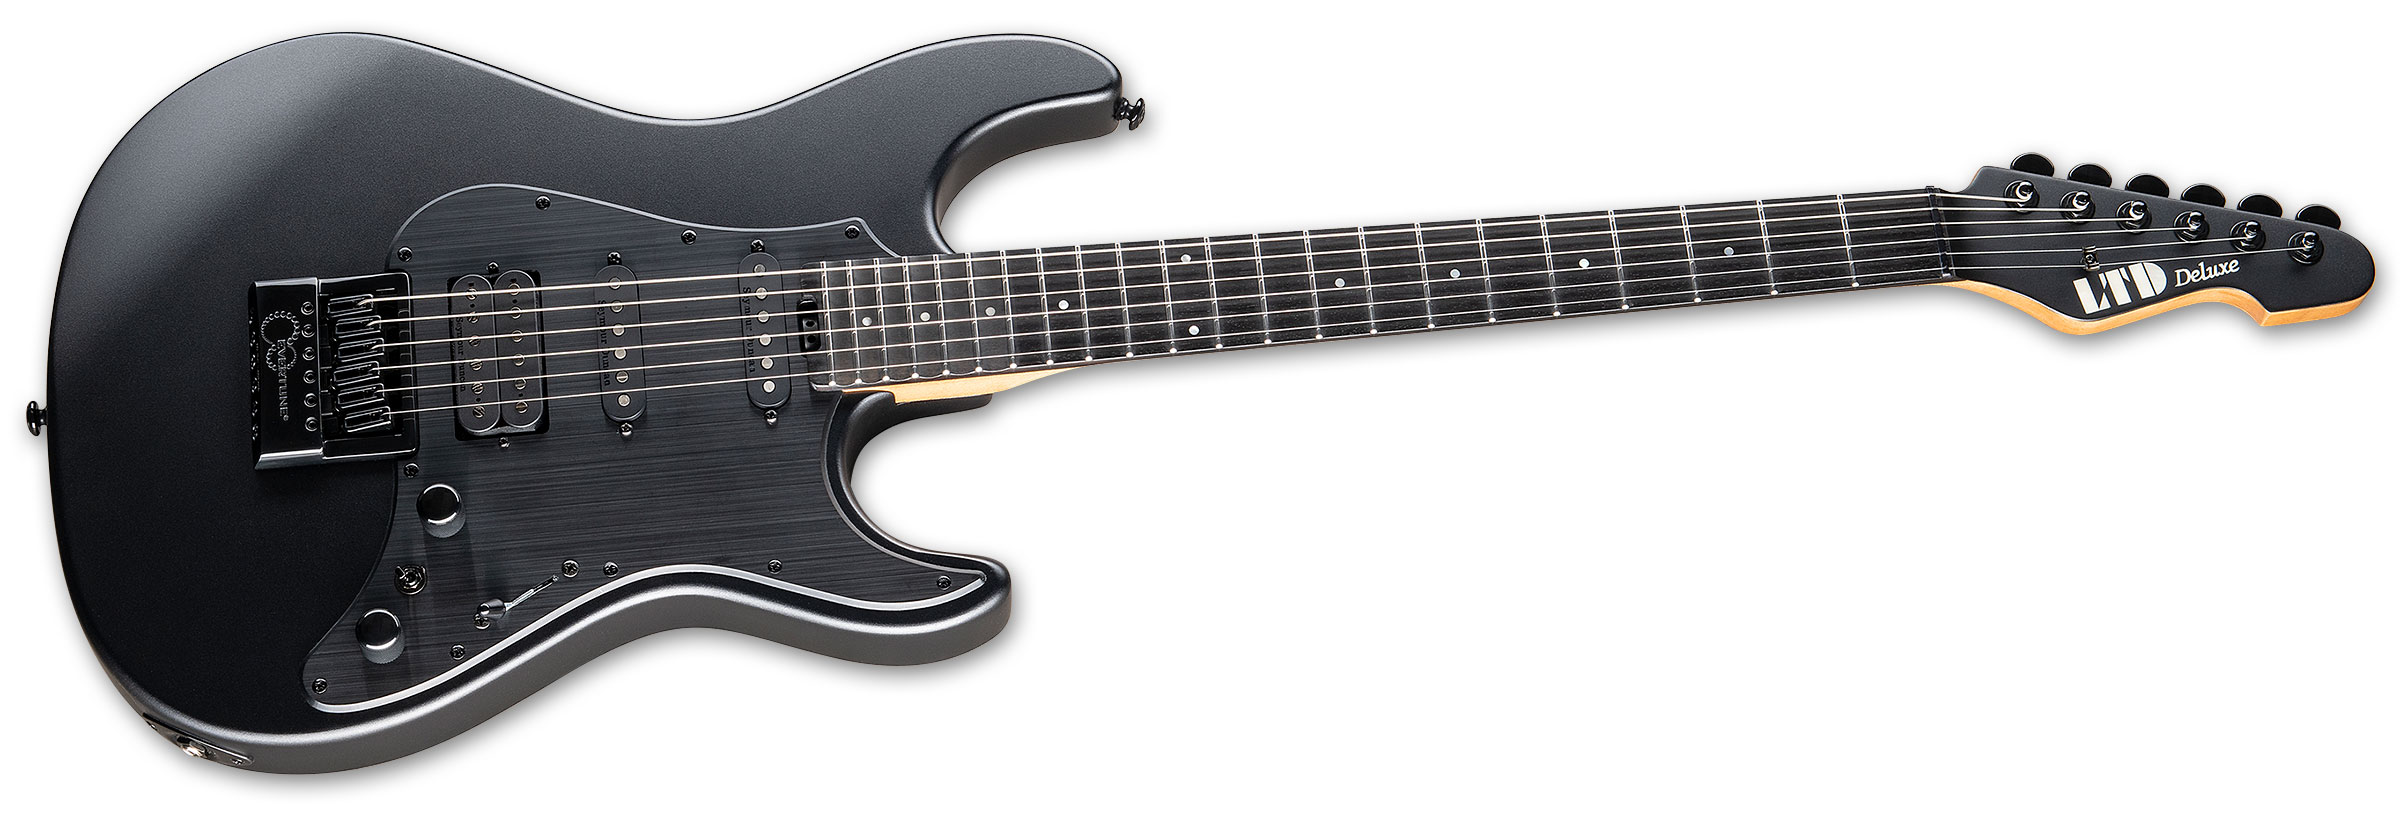 Ltd Sn-1000 Evertune Hss Seymour Duncan Ht Eb - Charcoal Metallic Satin - Str shape electric guitar - Variation 1